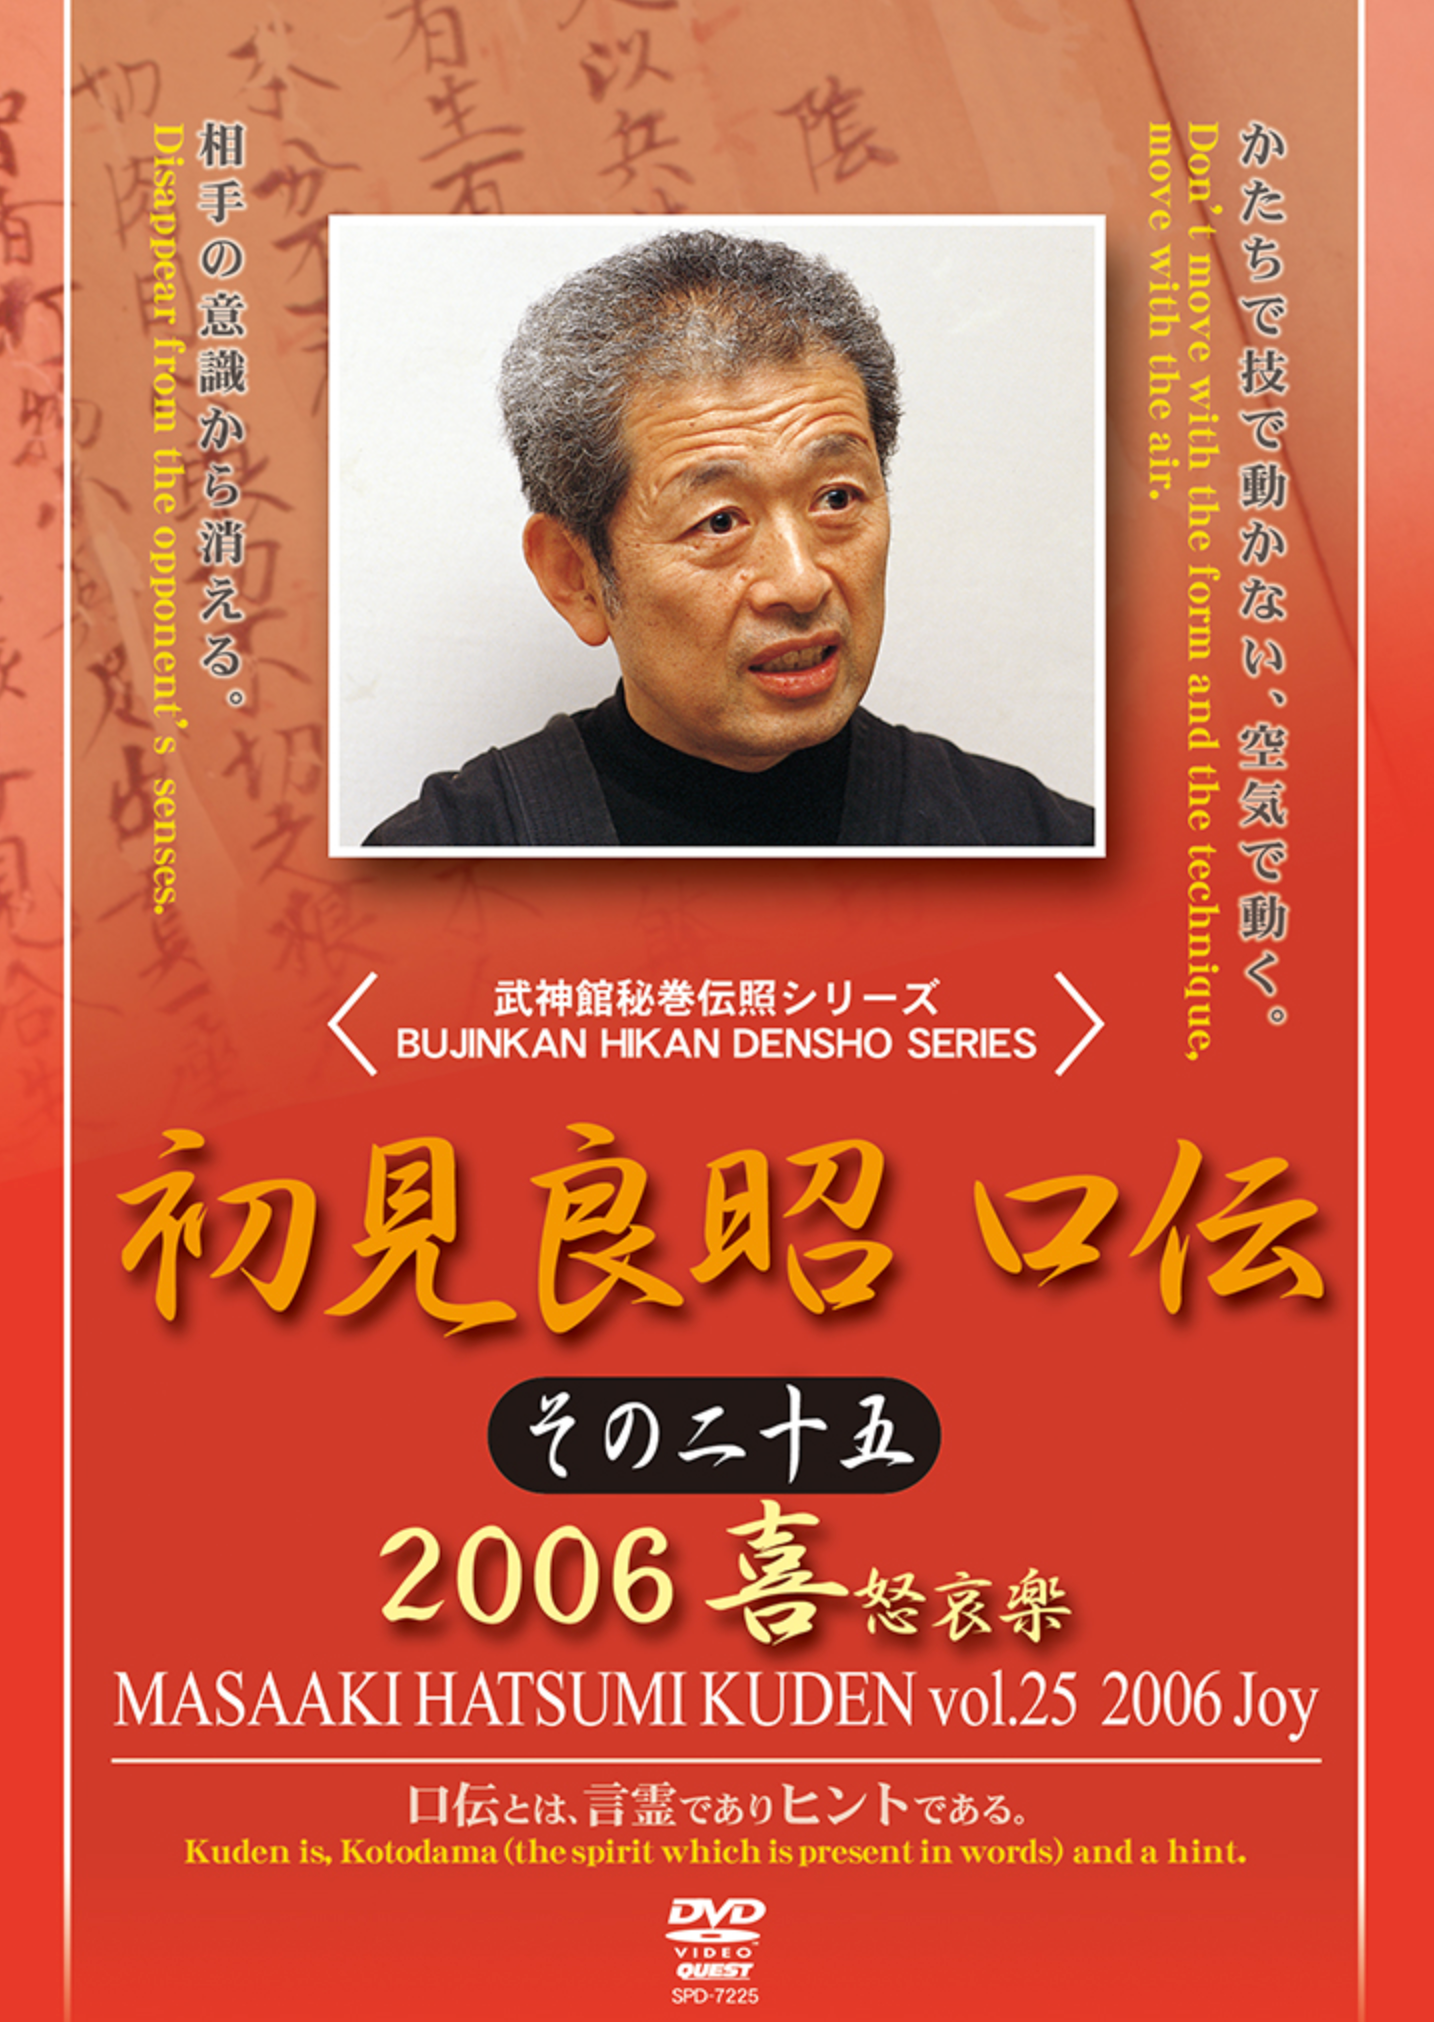 Kuden Vol 25 DVD with Masaaki Hatsumi - Budovideos Inc